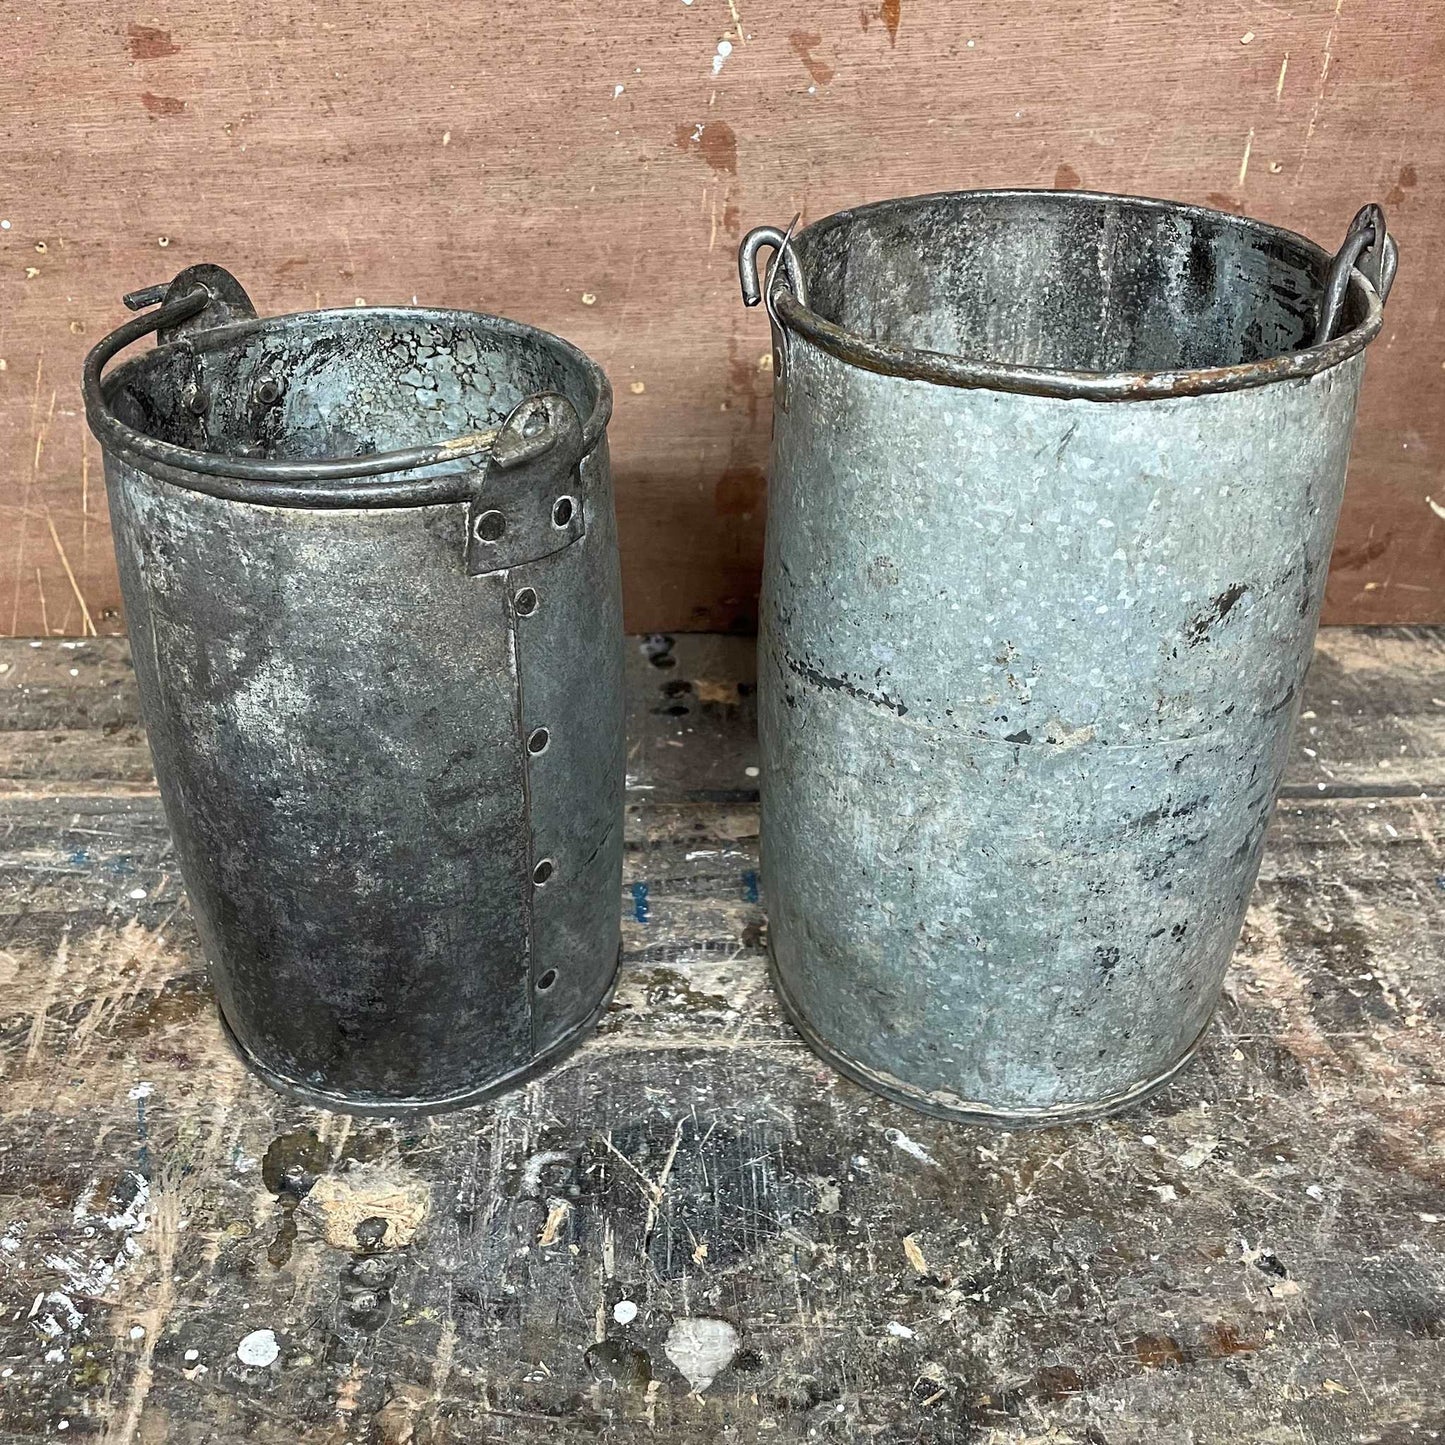 Metal planter bucket with handle.